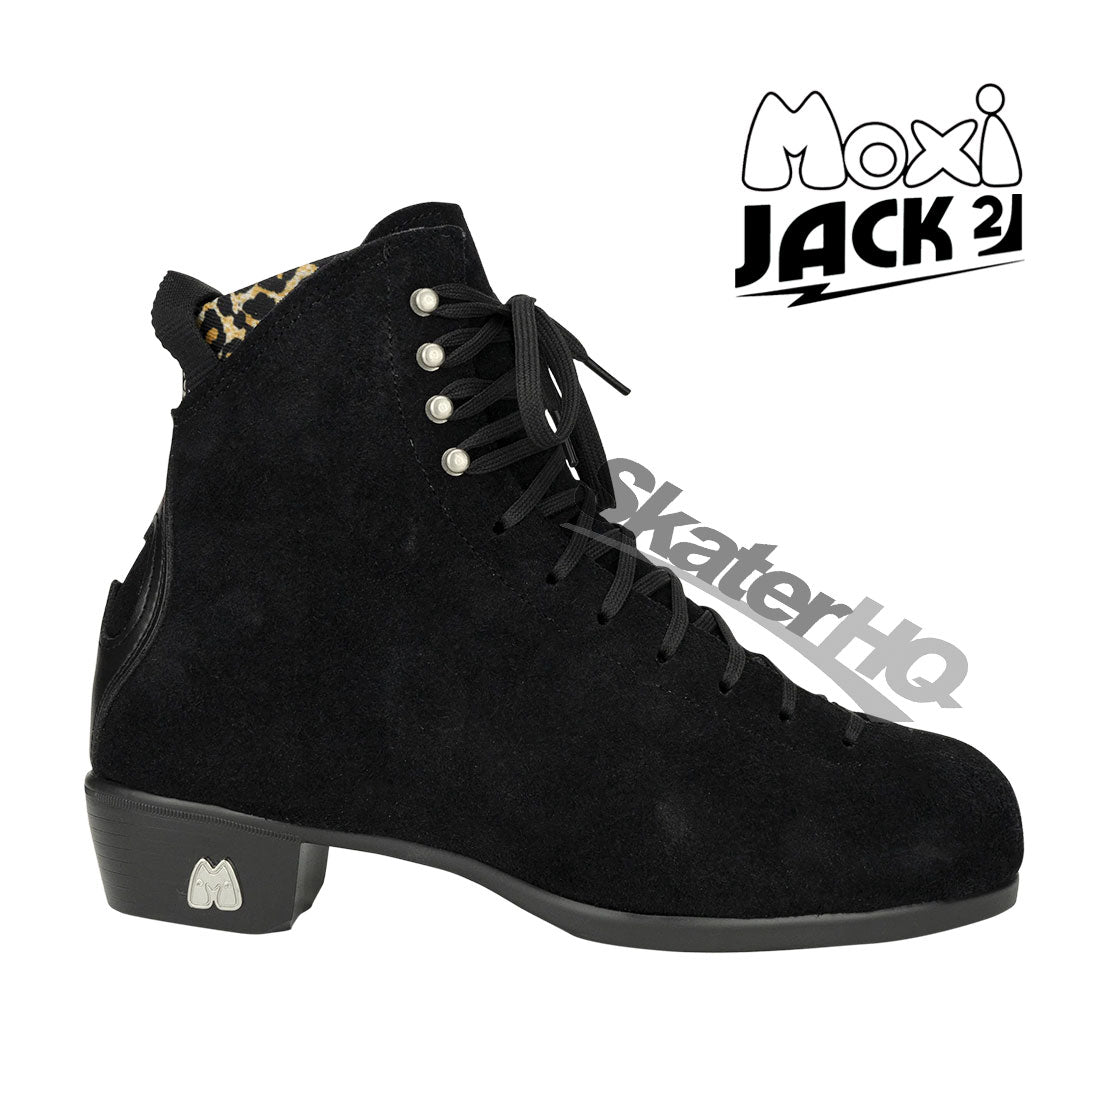 Moxi Jack 2 Boot - Classic Black Roller Skate Boots